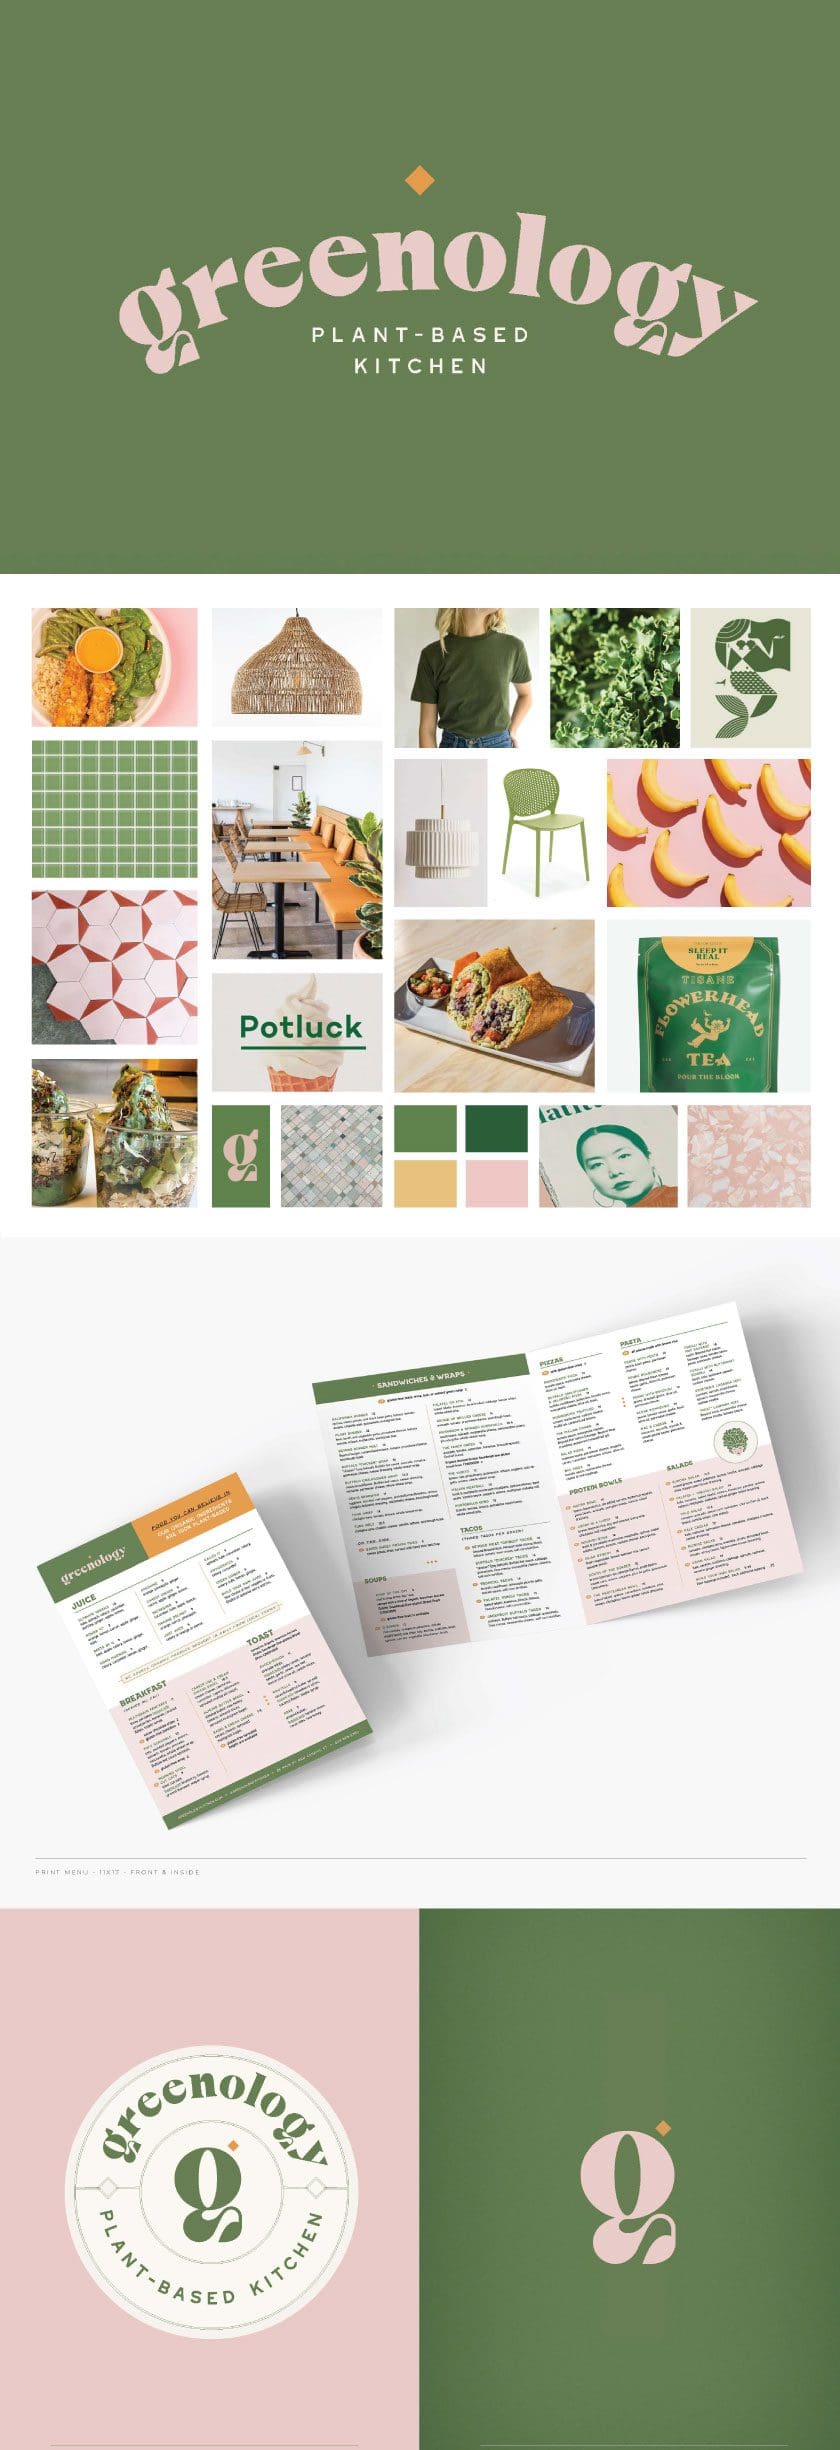 Greenology restaurant branding and design from a Nashville marketing company